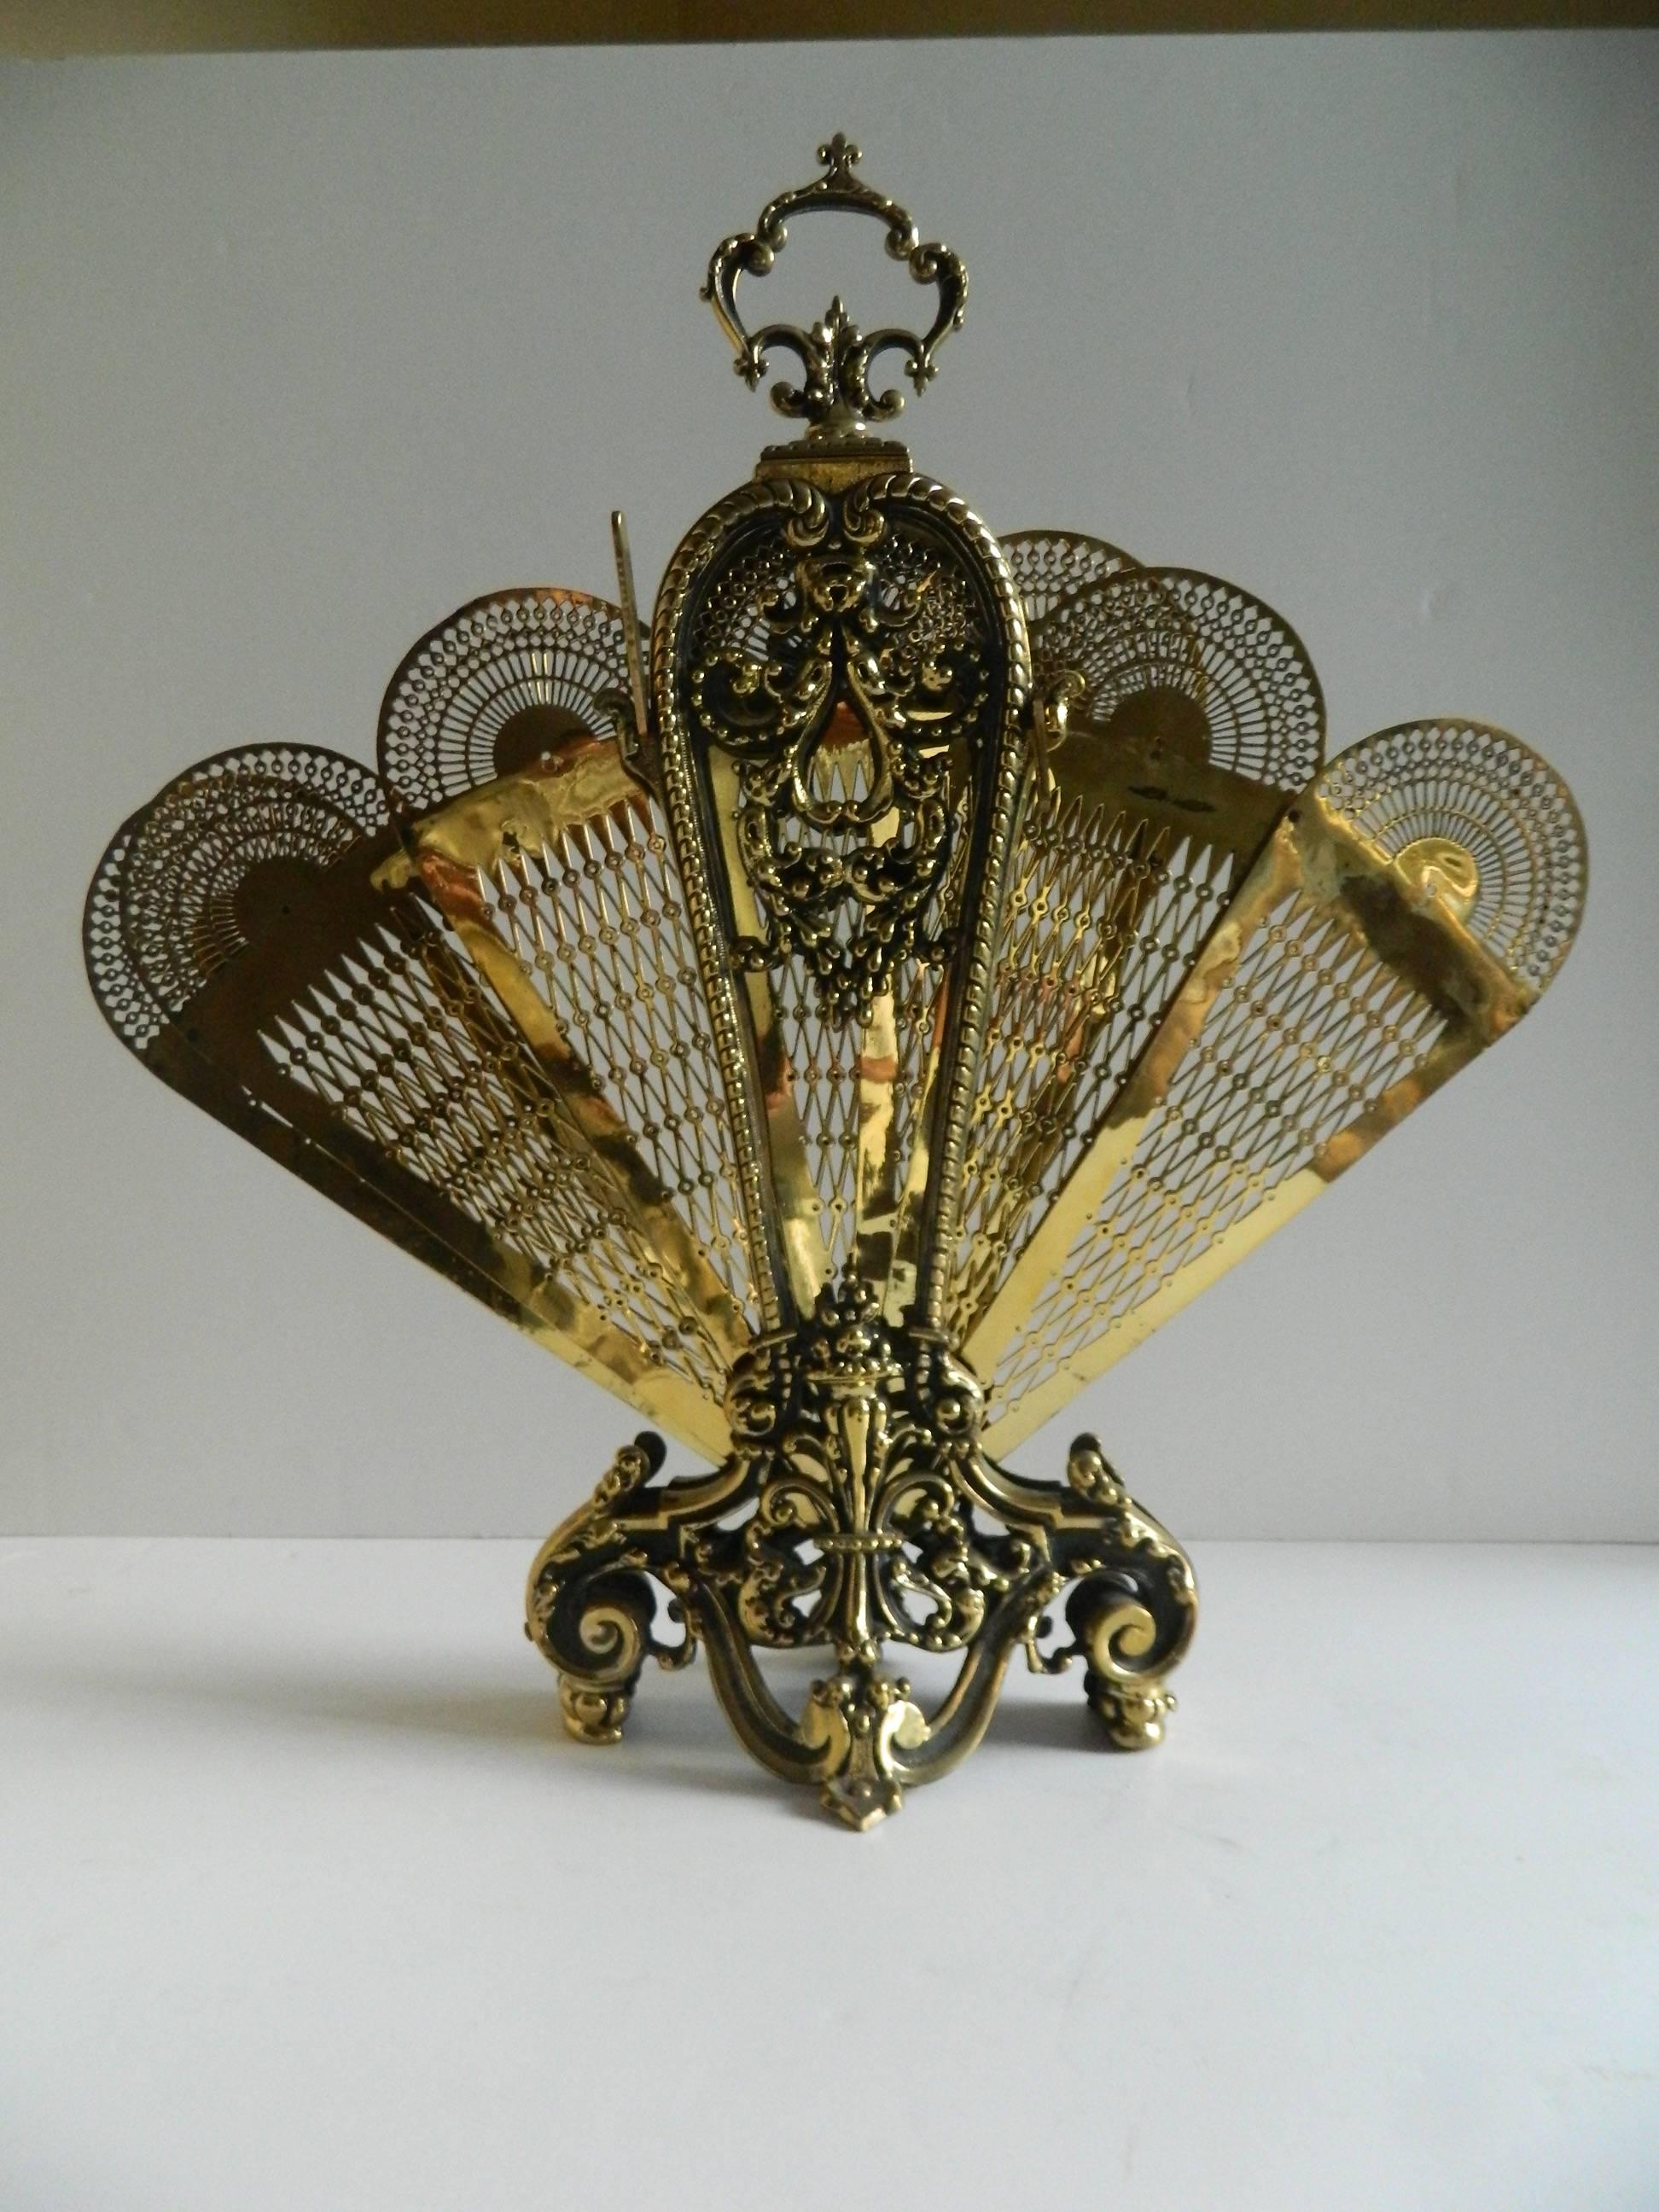 French polished brass fan fire screen, 19th century.